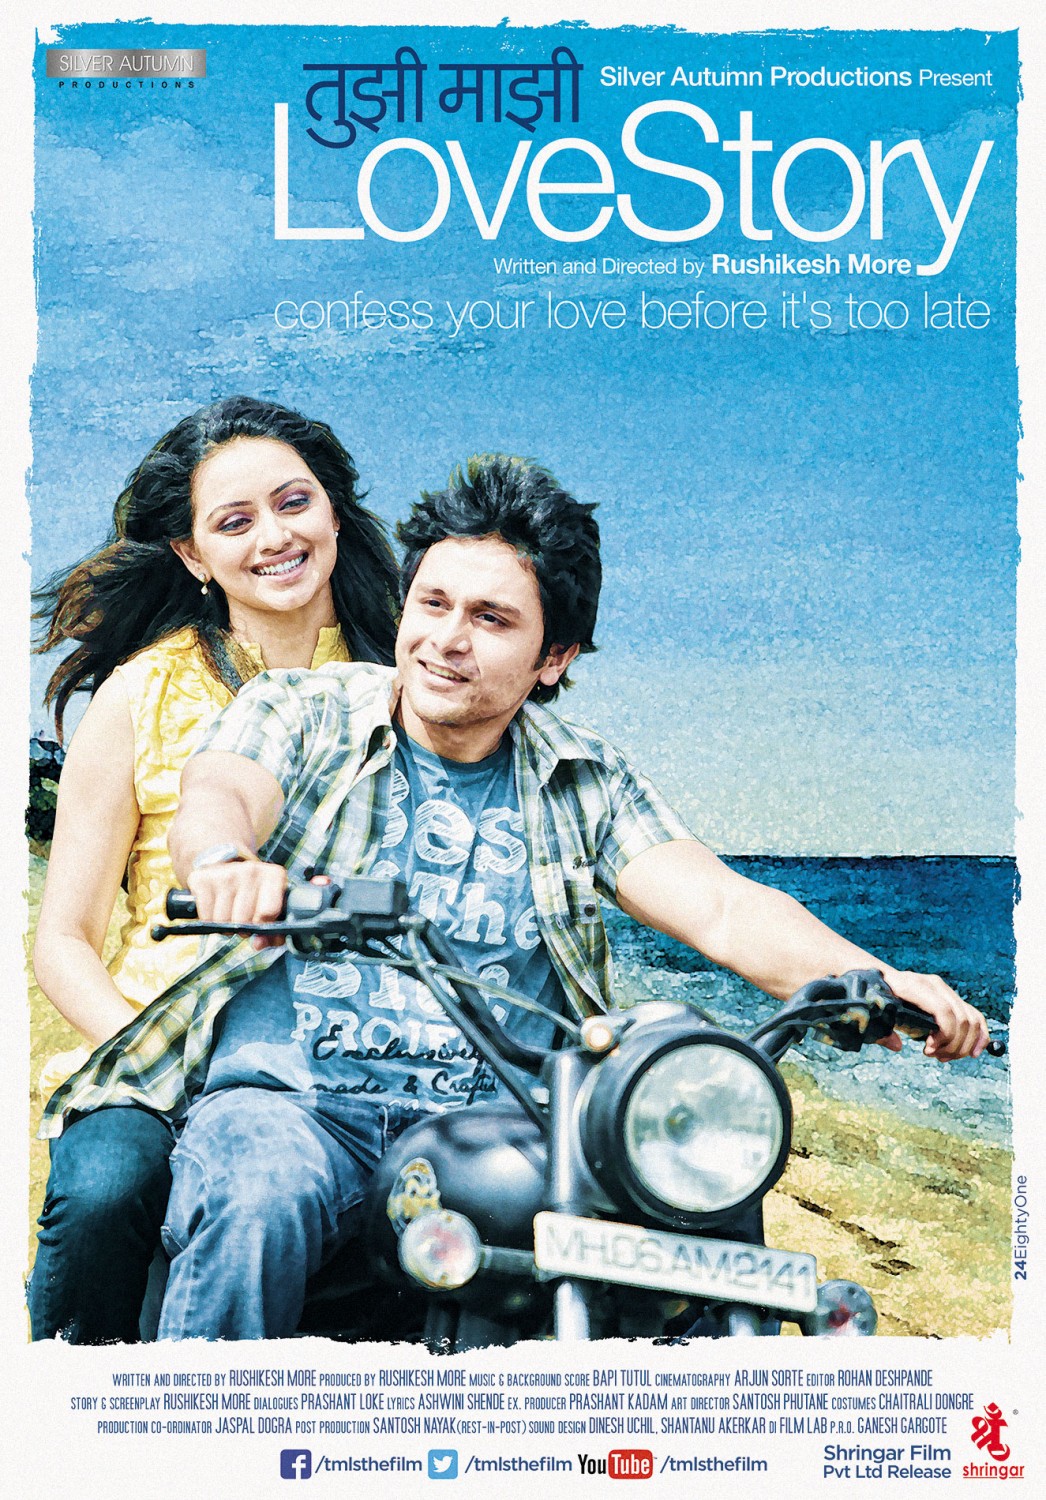 Extra Large Movie Poster Image for Tujhi Majhi Lovestory (#1 of 7)